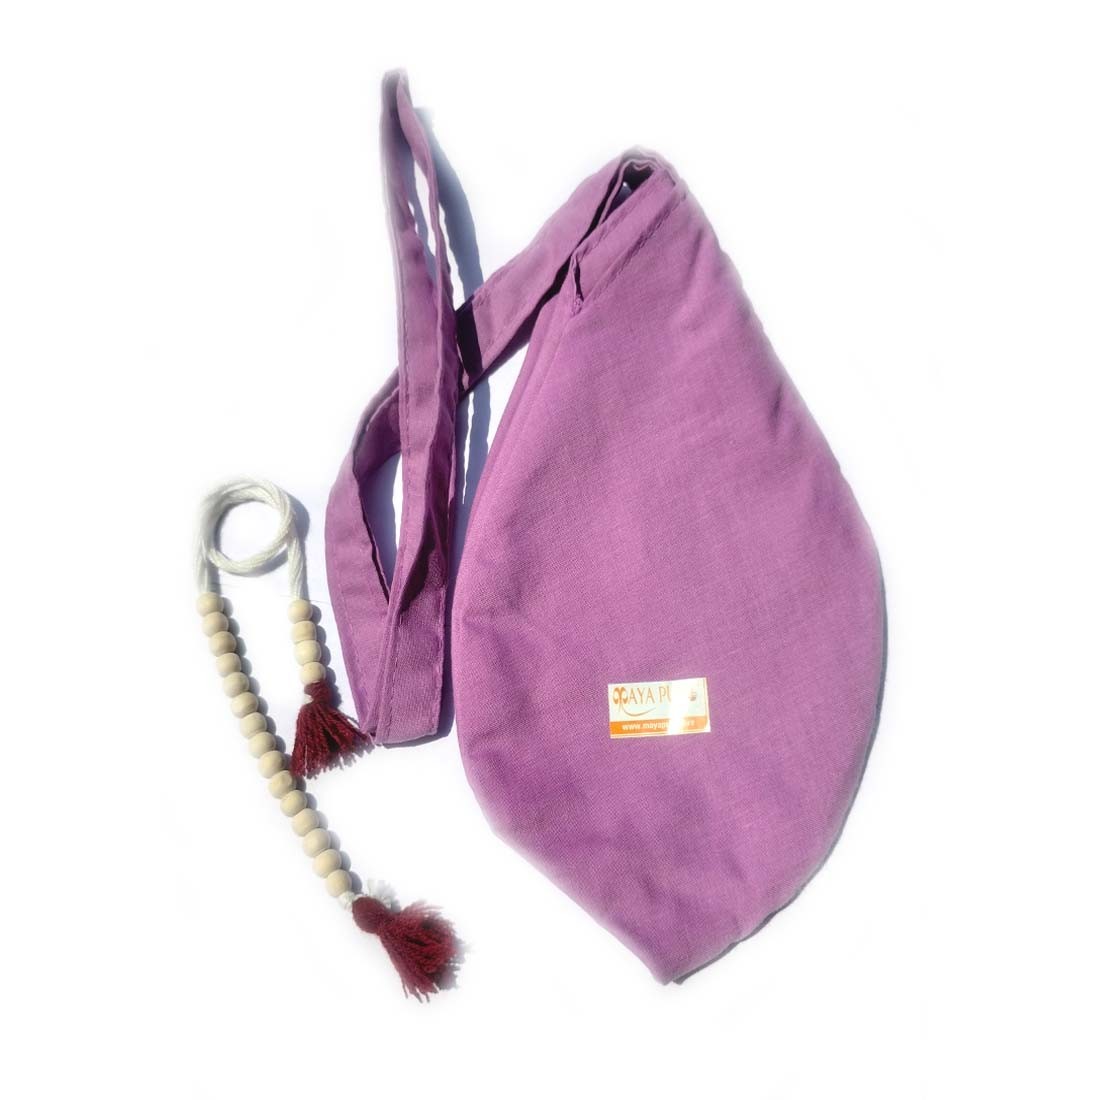 Khadi Cotton Japa Mala Bag/Chanting/Beads Bag with Sakshi Mala (Cadillac Pink)